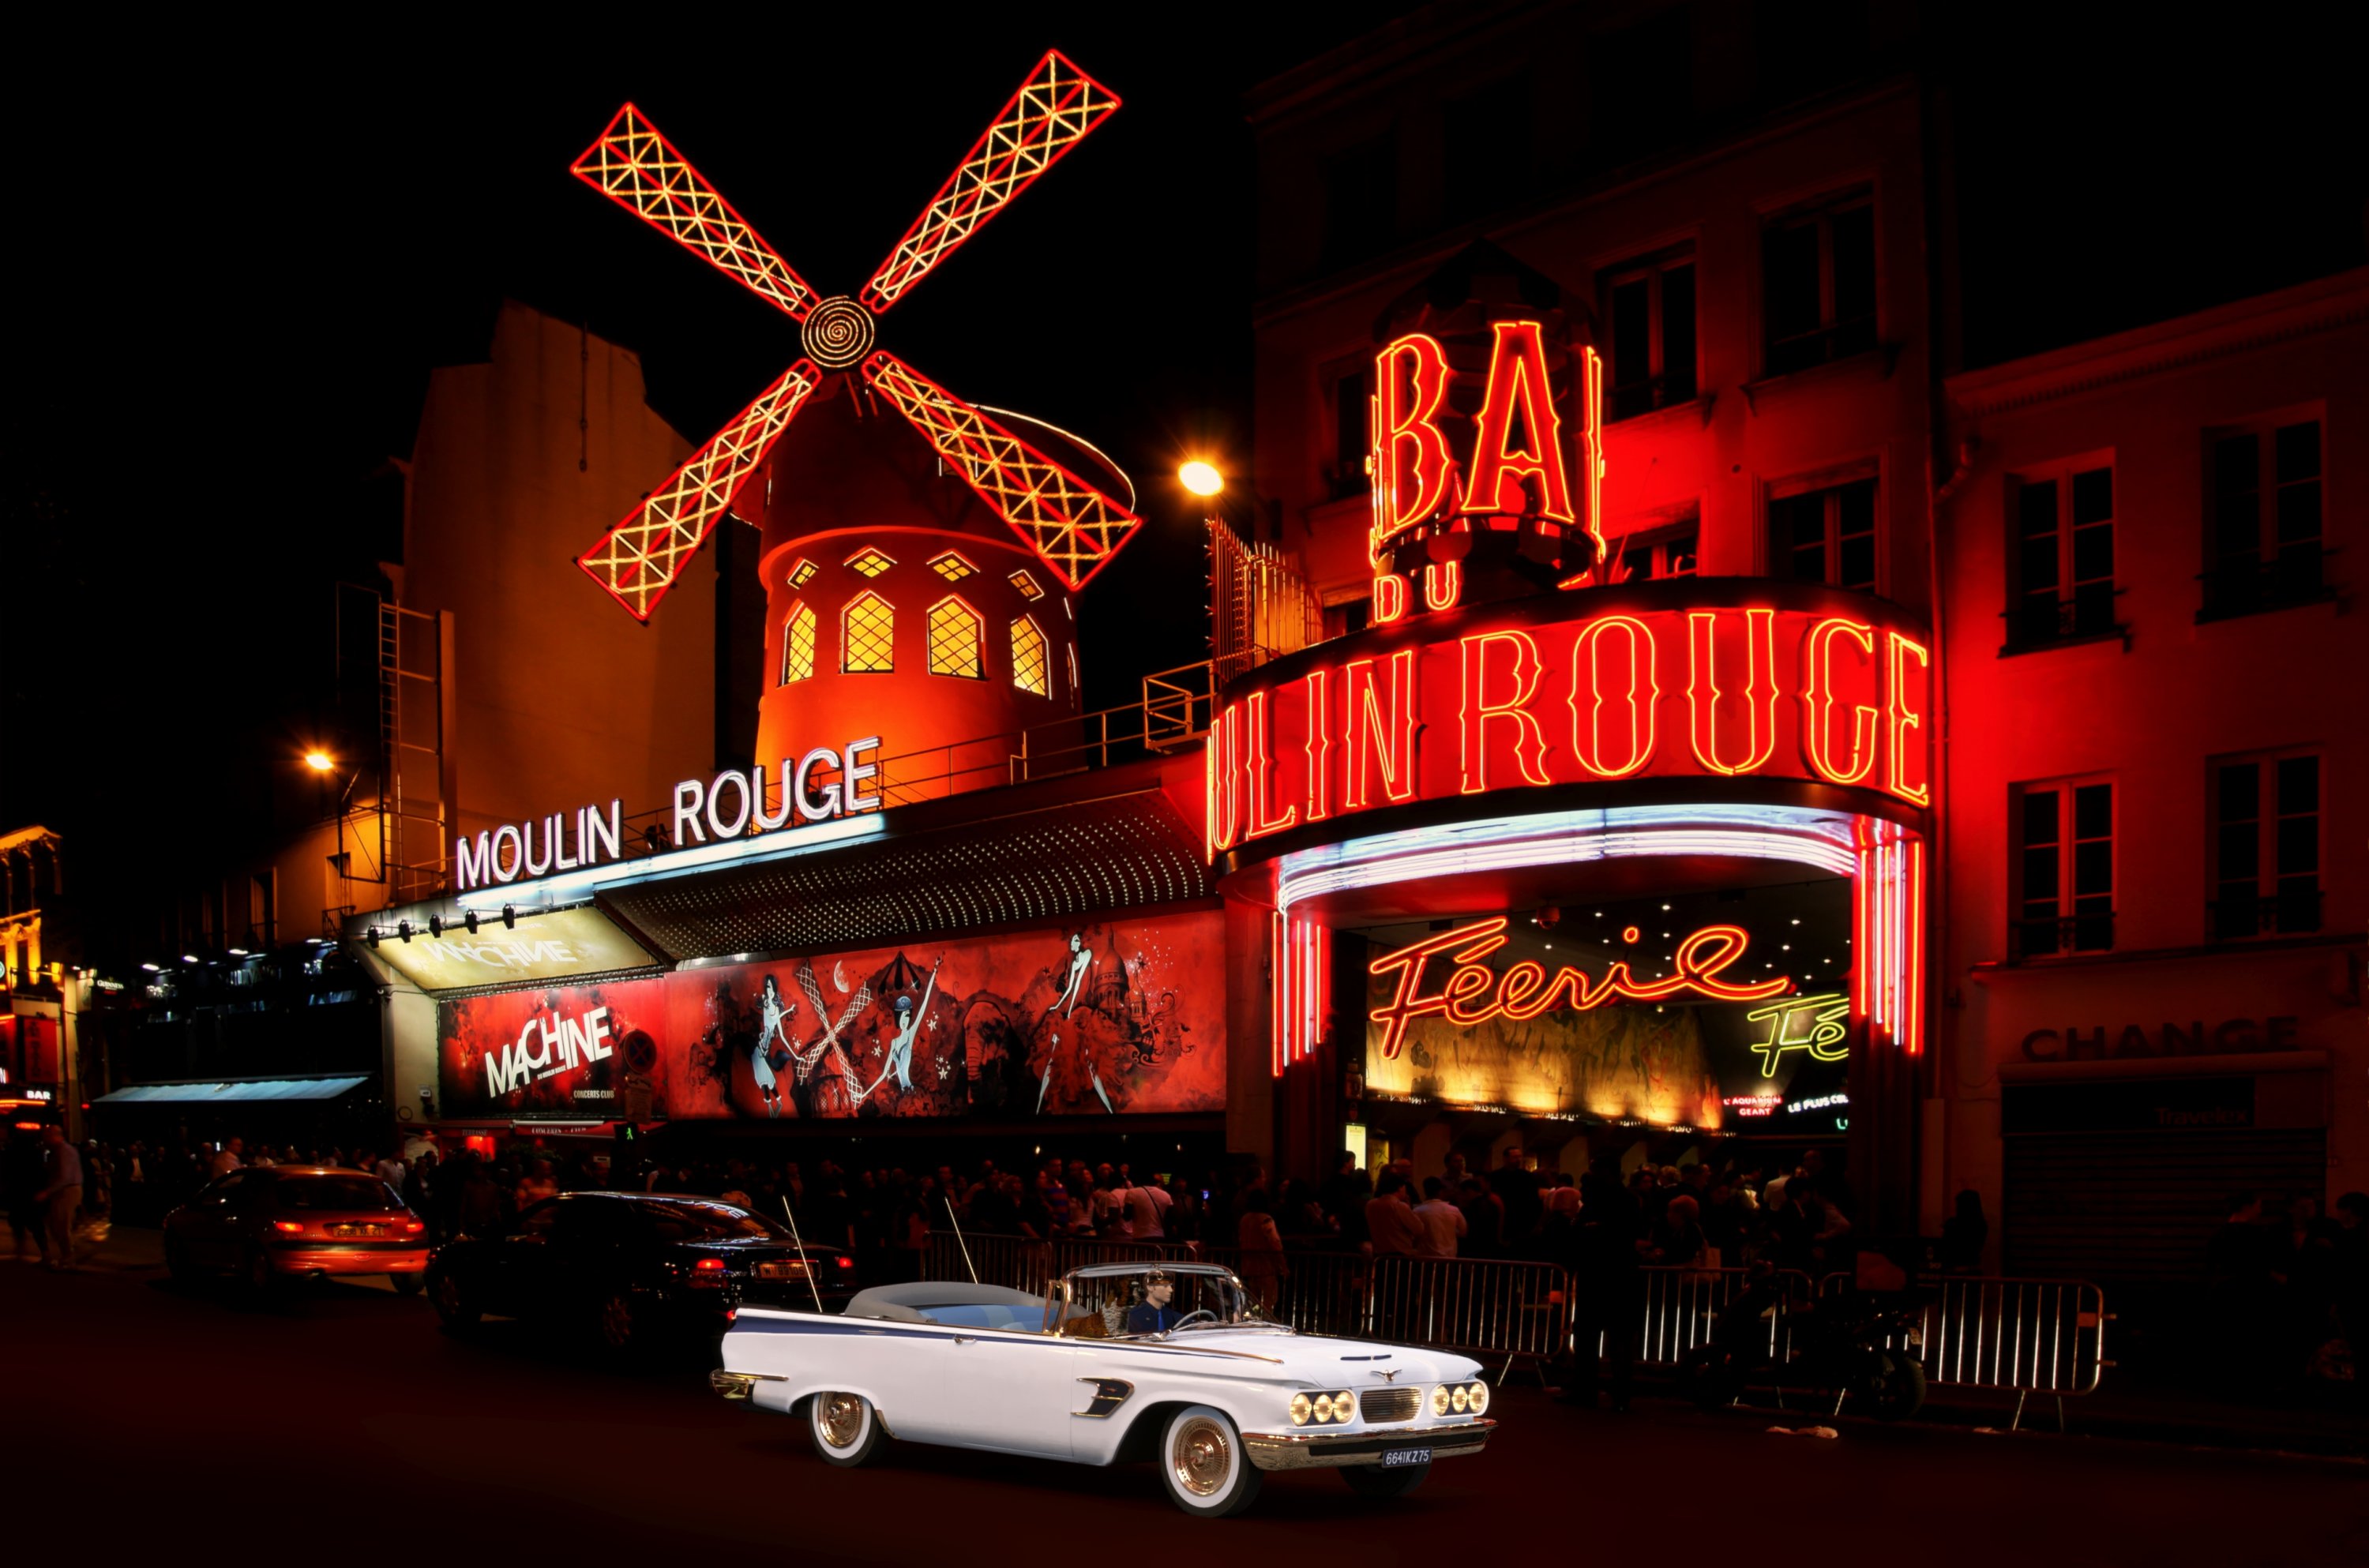 Pr amer u Moulin rouge2.jpg